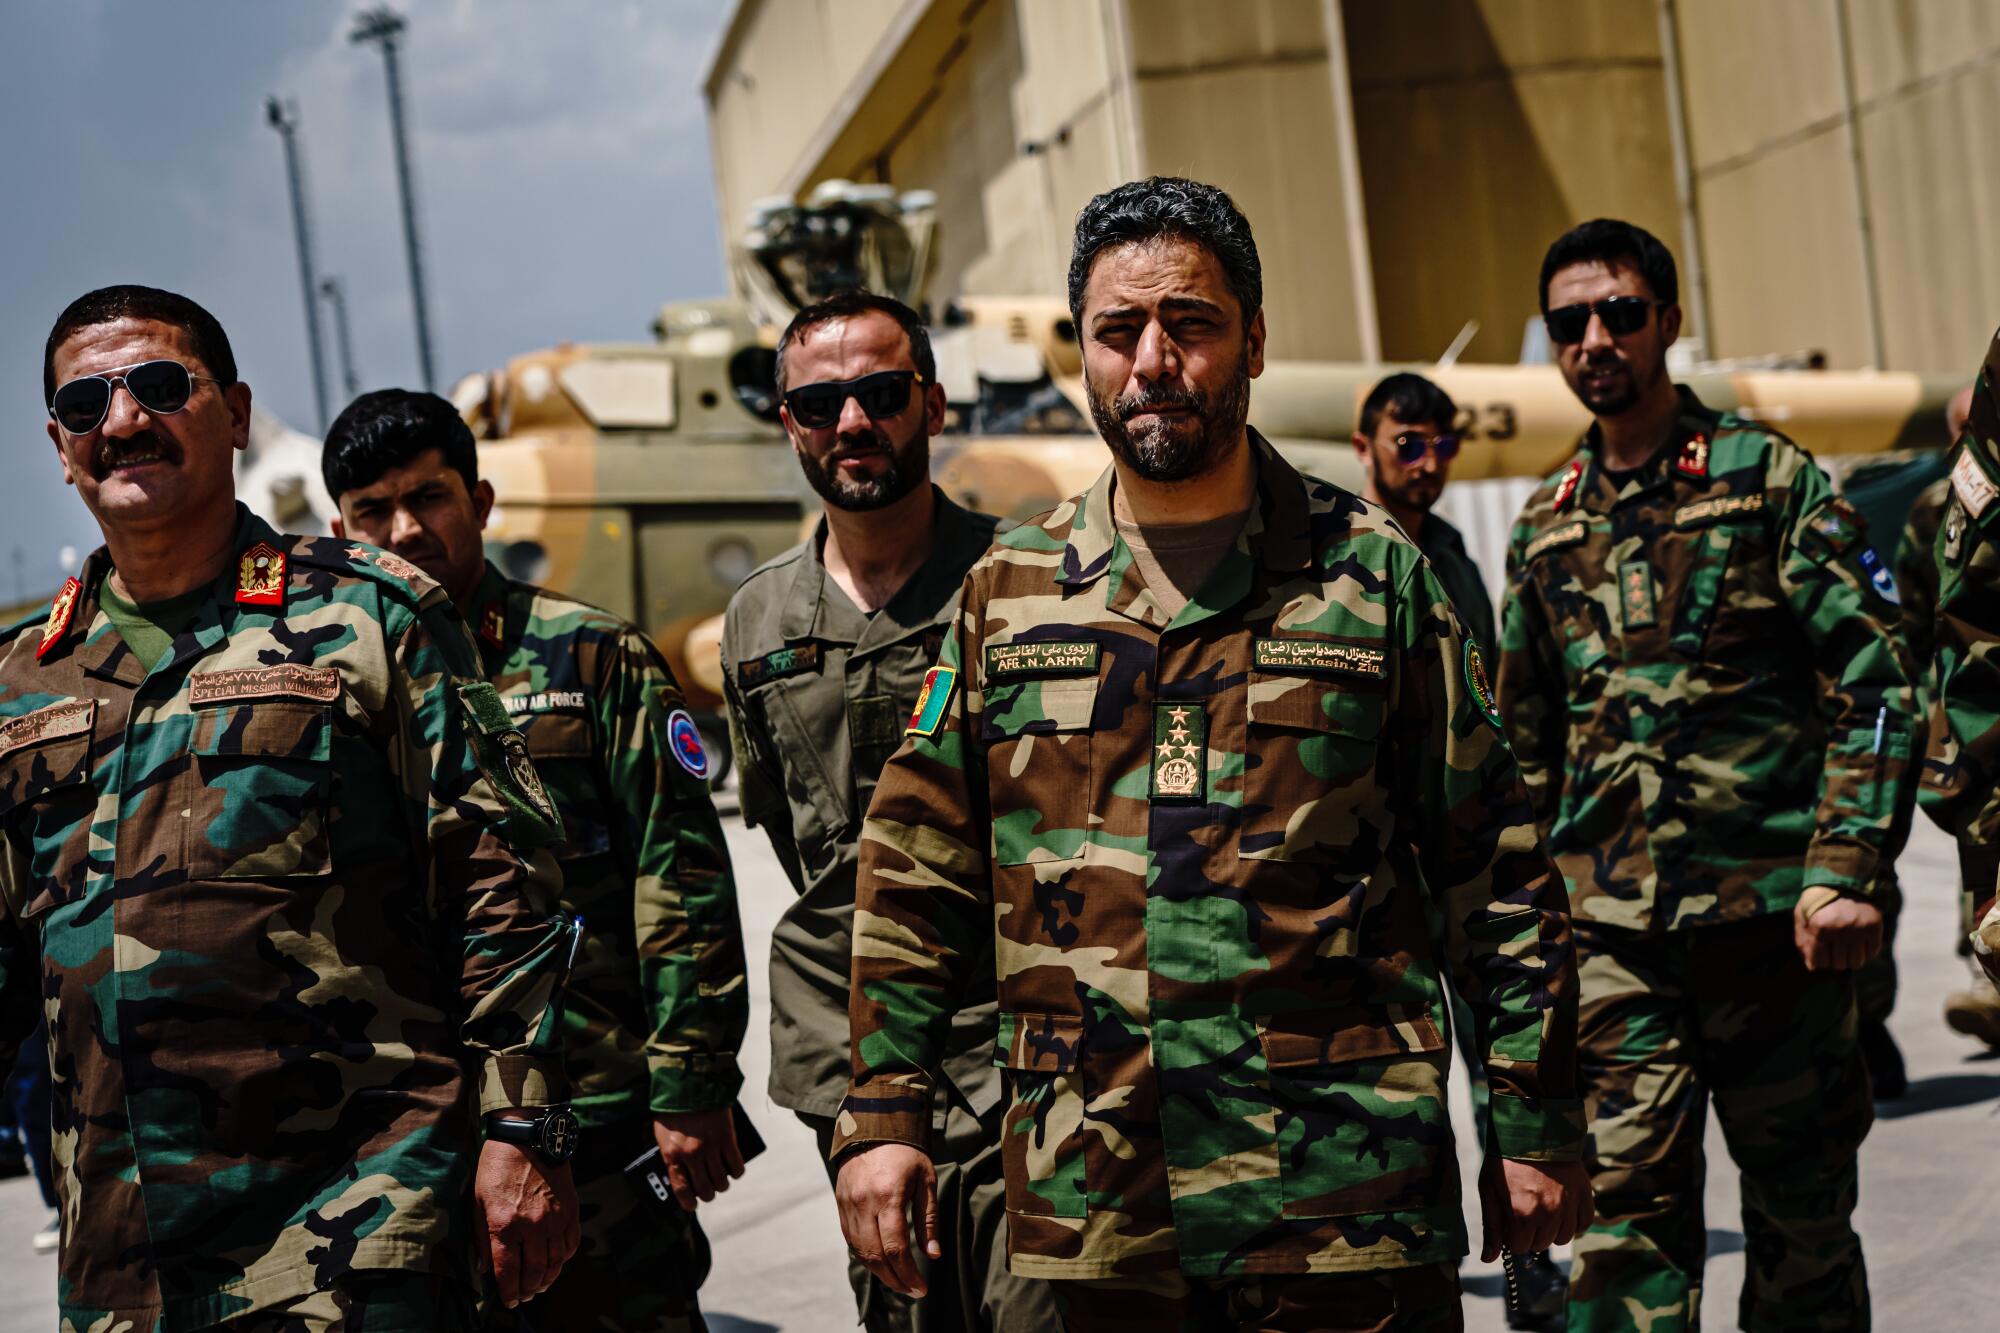 Afghan military officers walk together